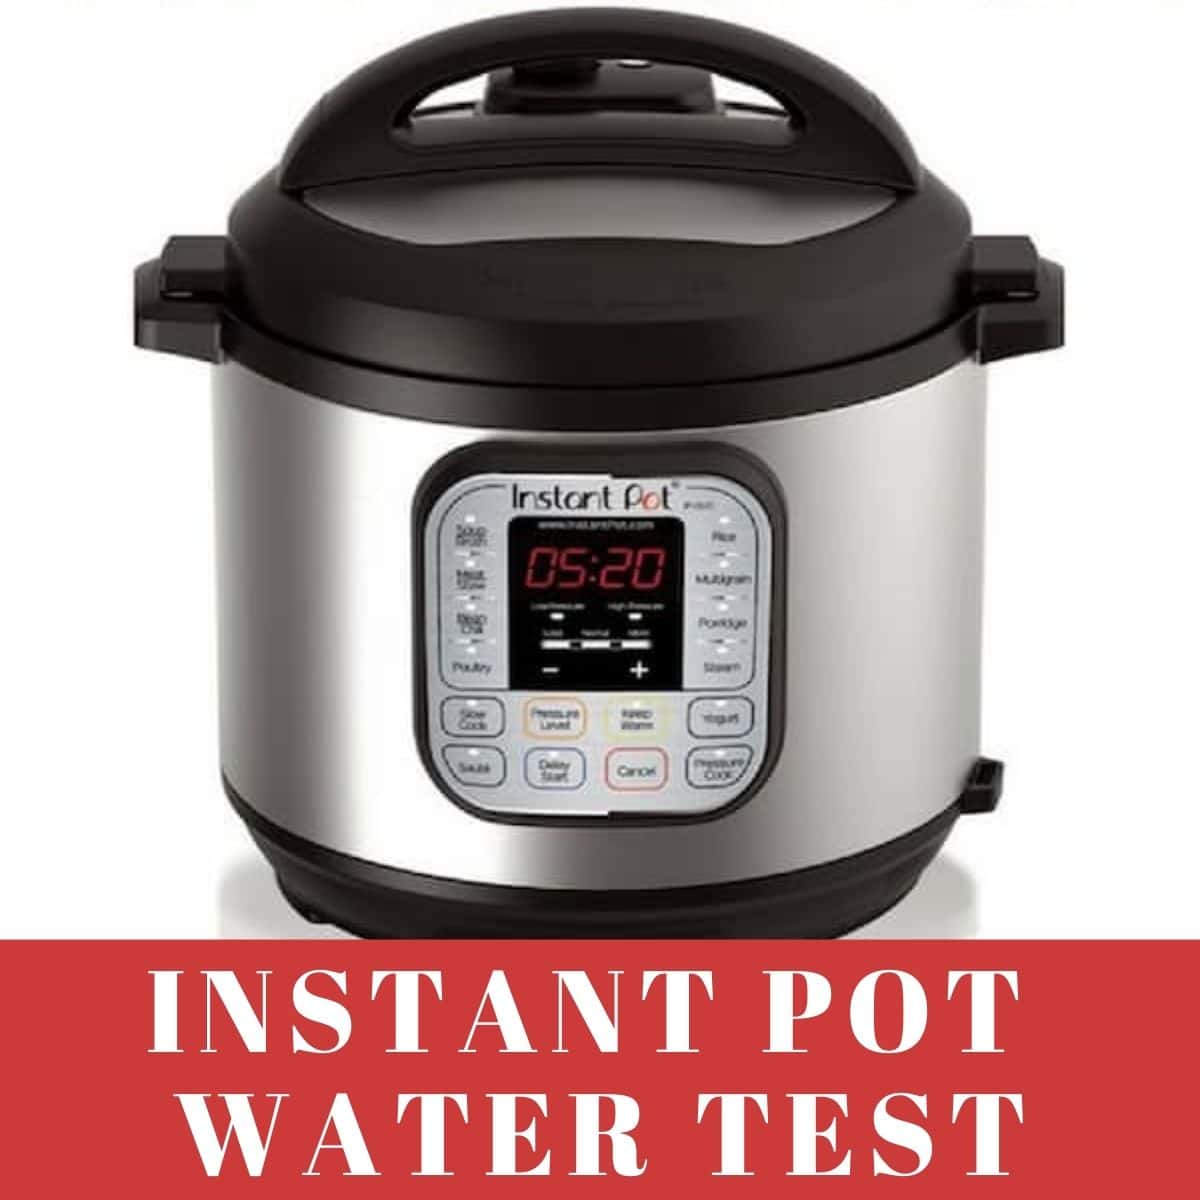 Instant pot water test